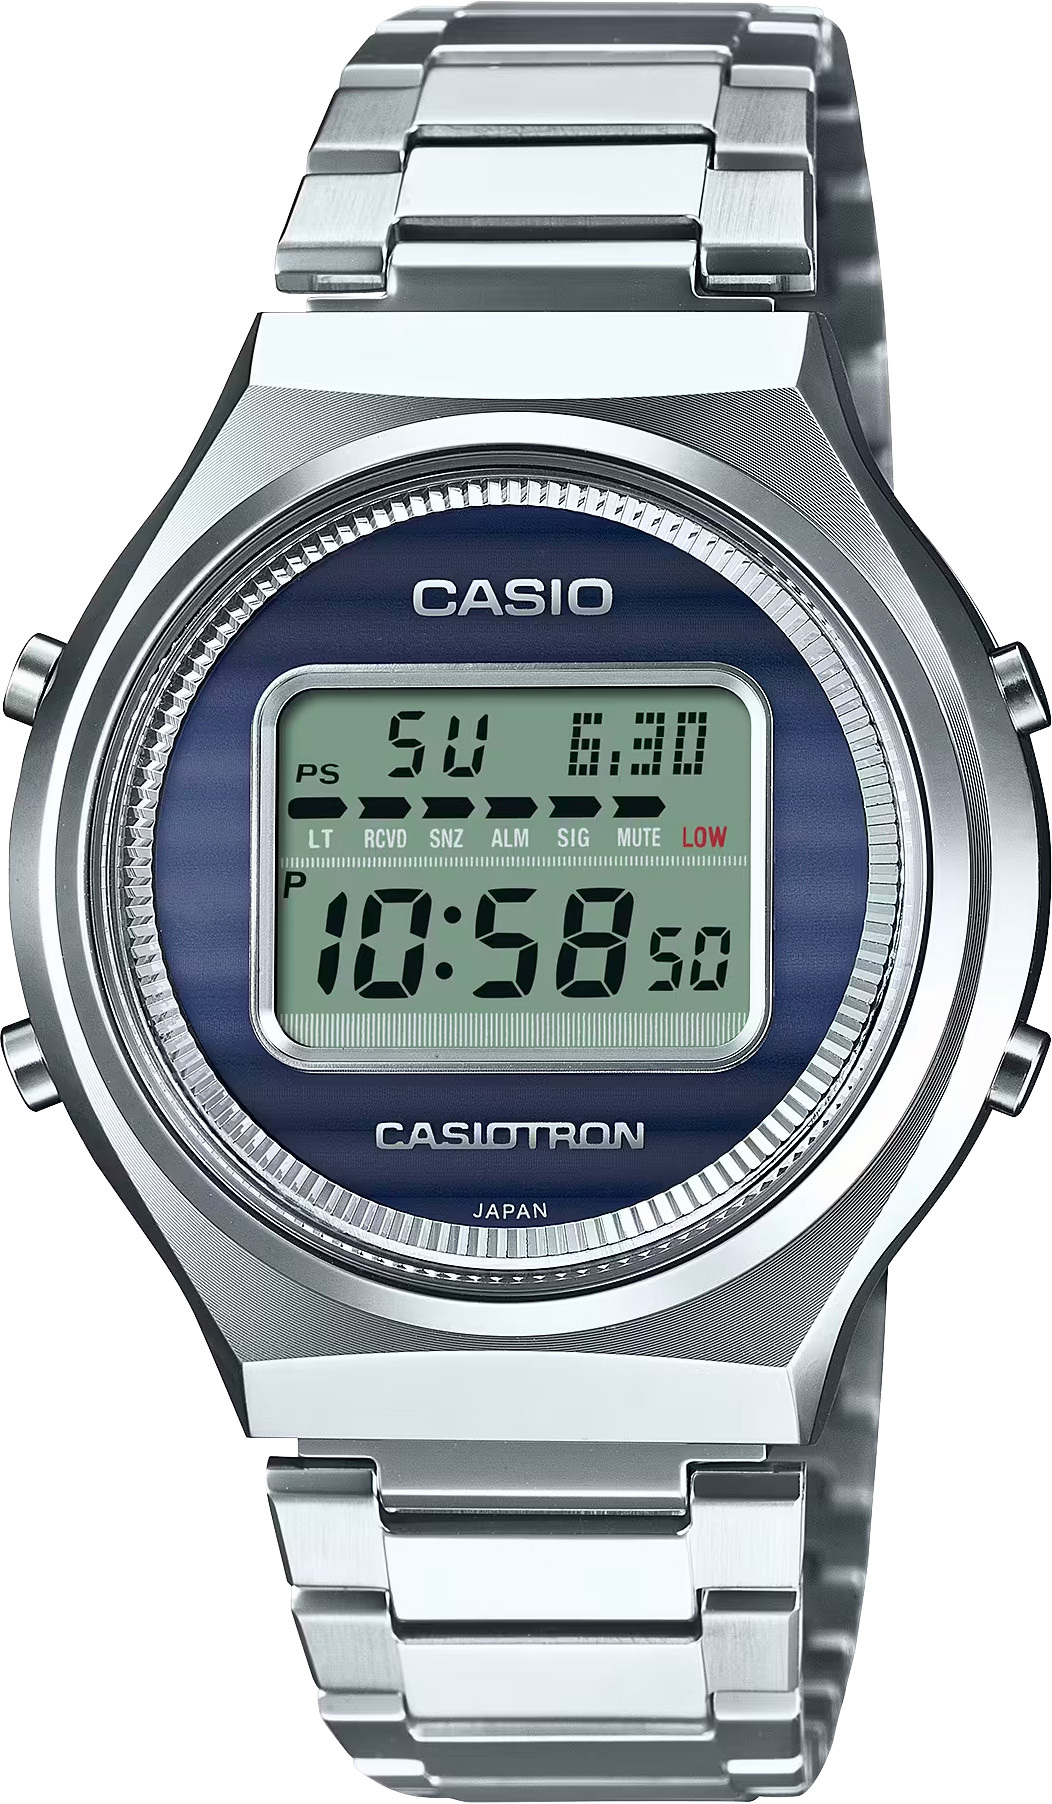 Casio TRN50-2A Casiotron 50th Anniversary - Exquisite Timepieces